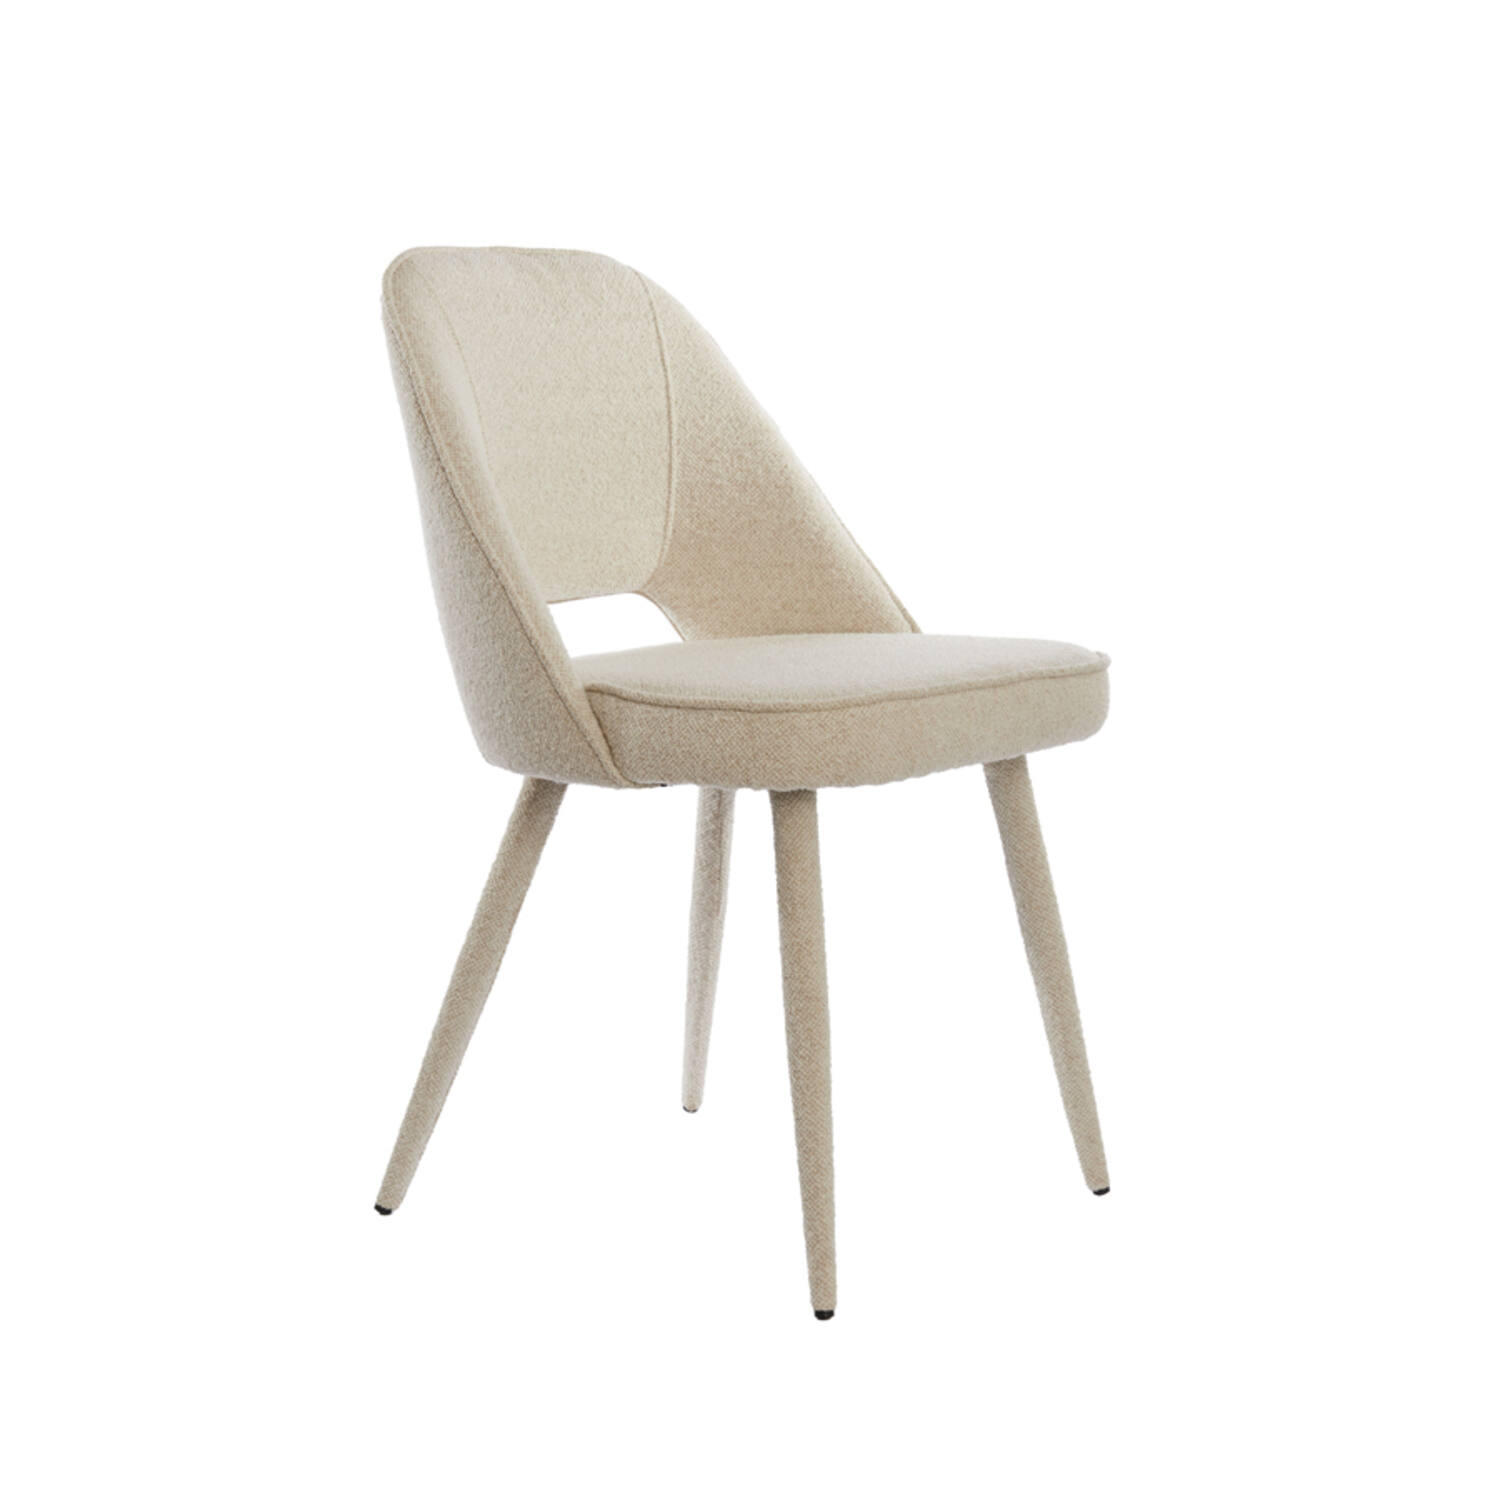 Dining chair 57x51x84 cm DJESLIN beige